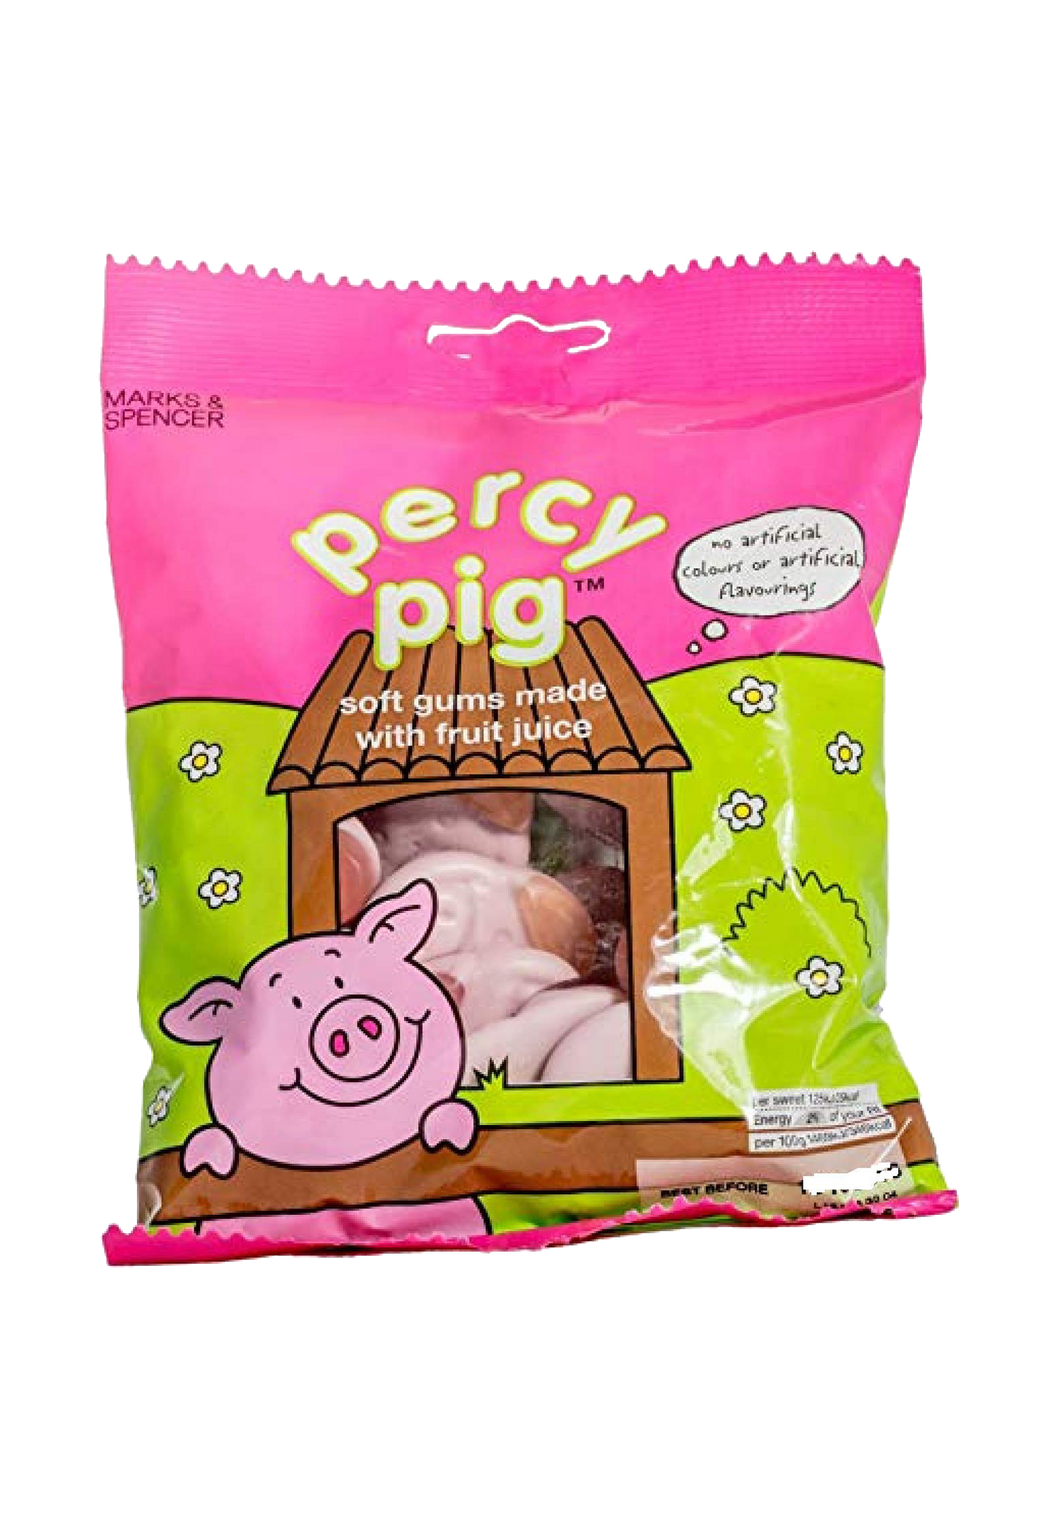 Percy Pig 170g